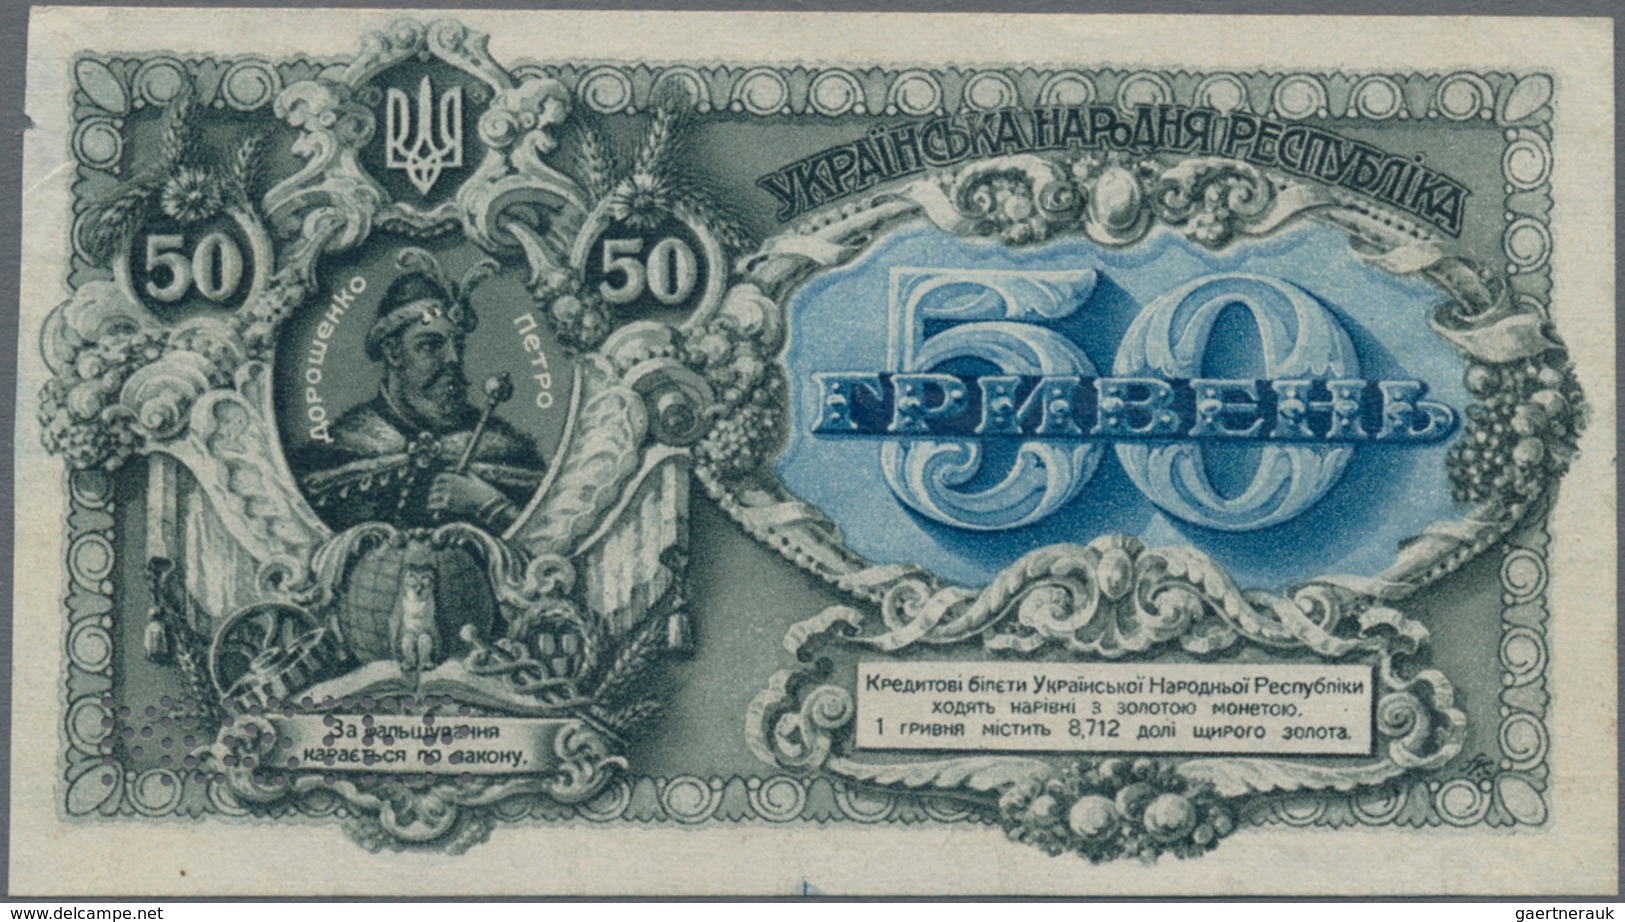 Ukraina / Ukraine: 50 Hriven 1920 P. 26, Rare Unissued Banknote, Perforated "MUSTER", No Folds, But - Ucrania